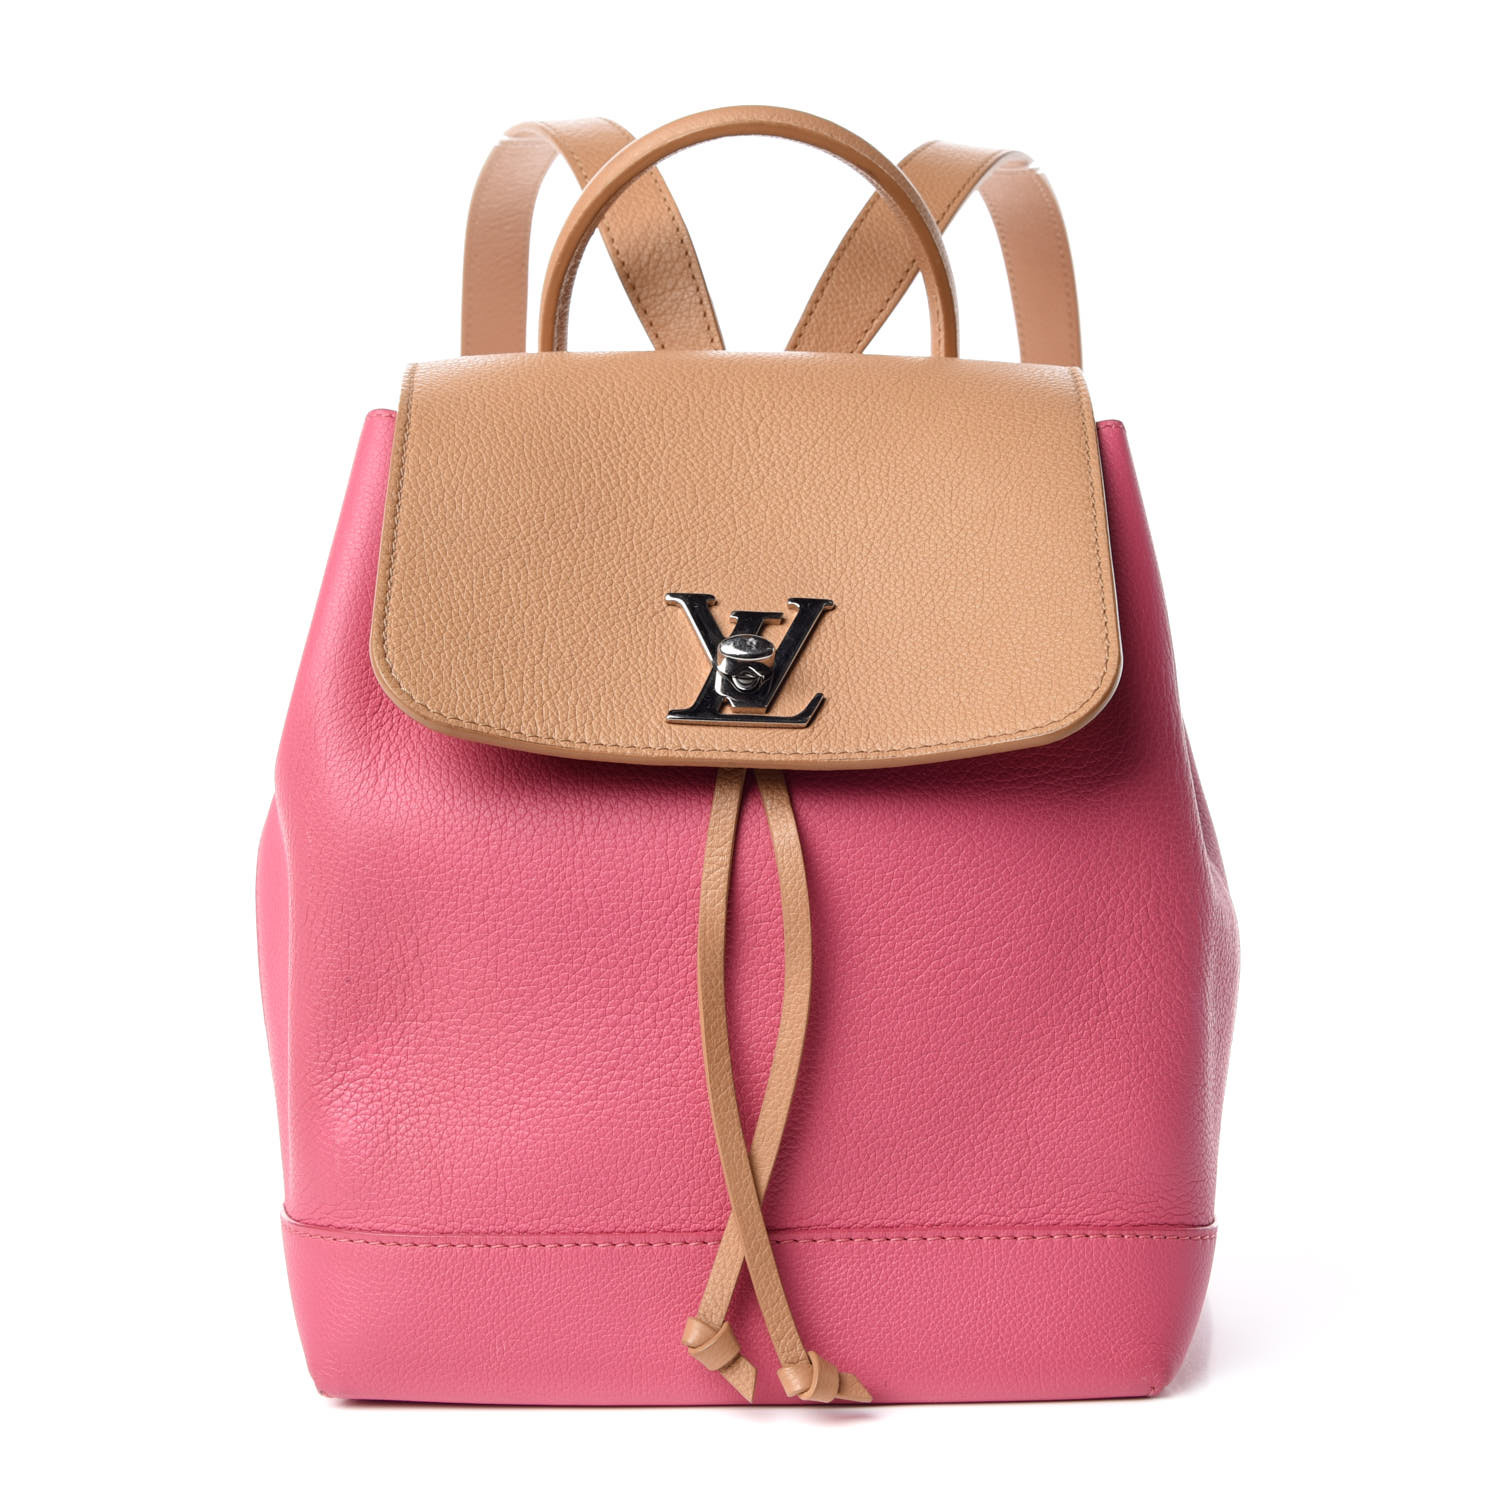 LOUIS VUITTON Soft Calfskin Backpack Pink | FASHIONPHILE